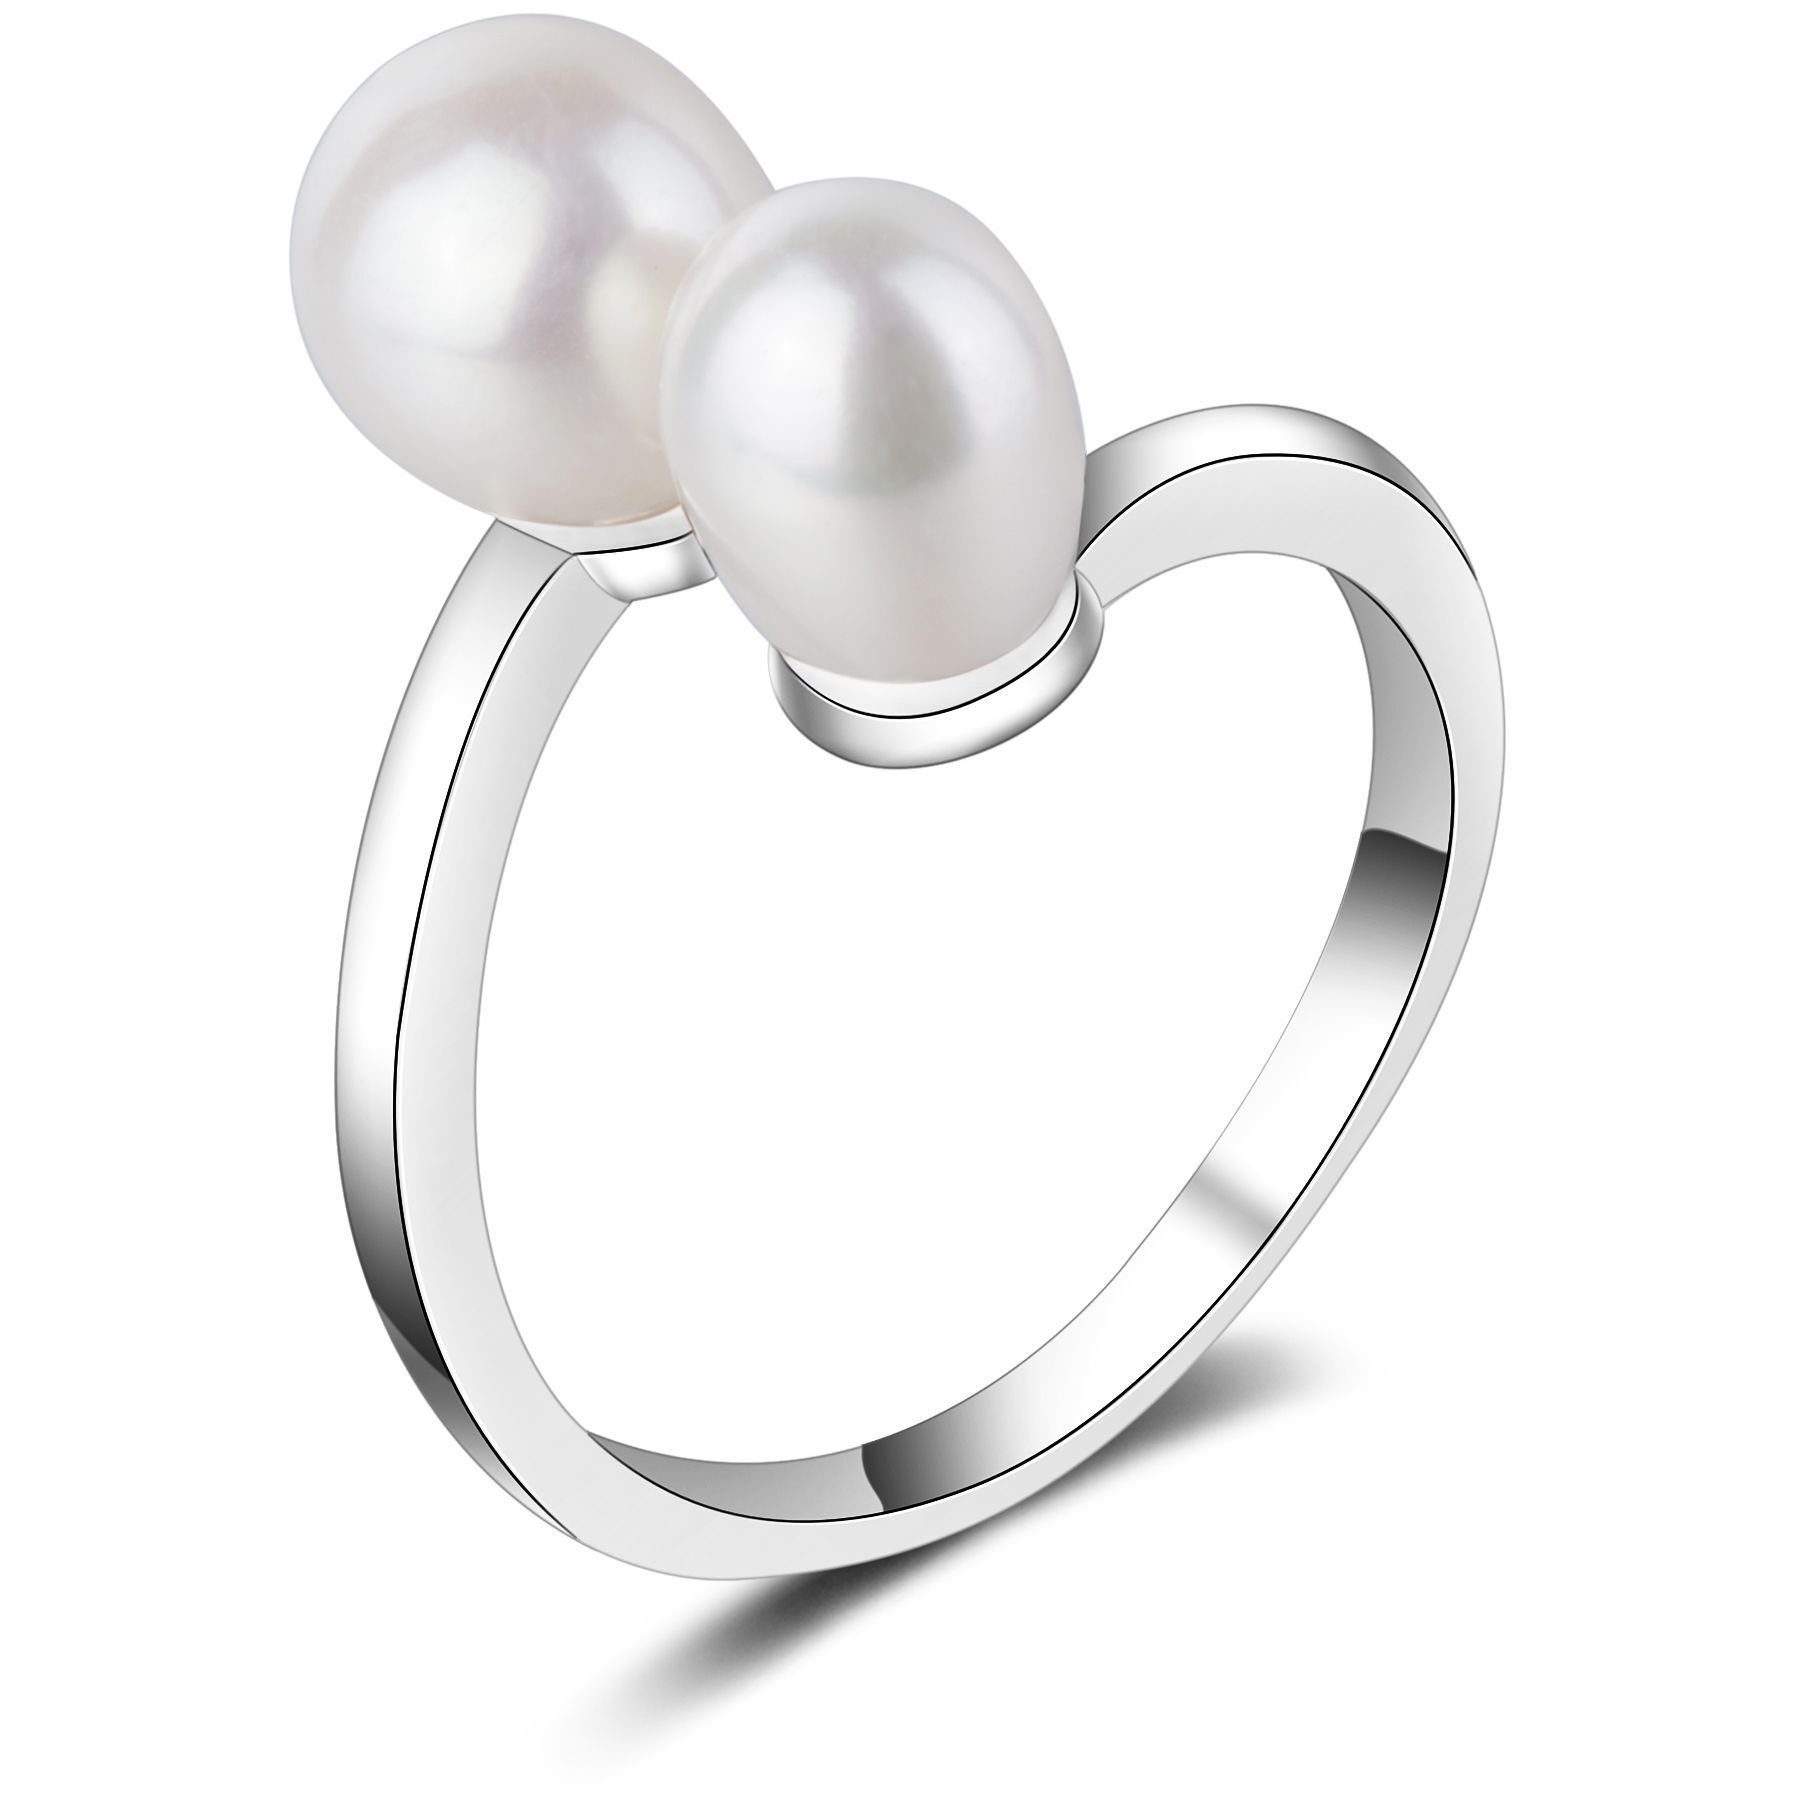 AILORIA Fingerring MAYUKO ring silber/weiße perle, Ring Silber/weiße Perle